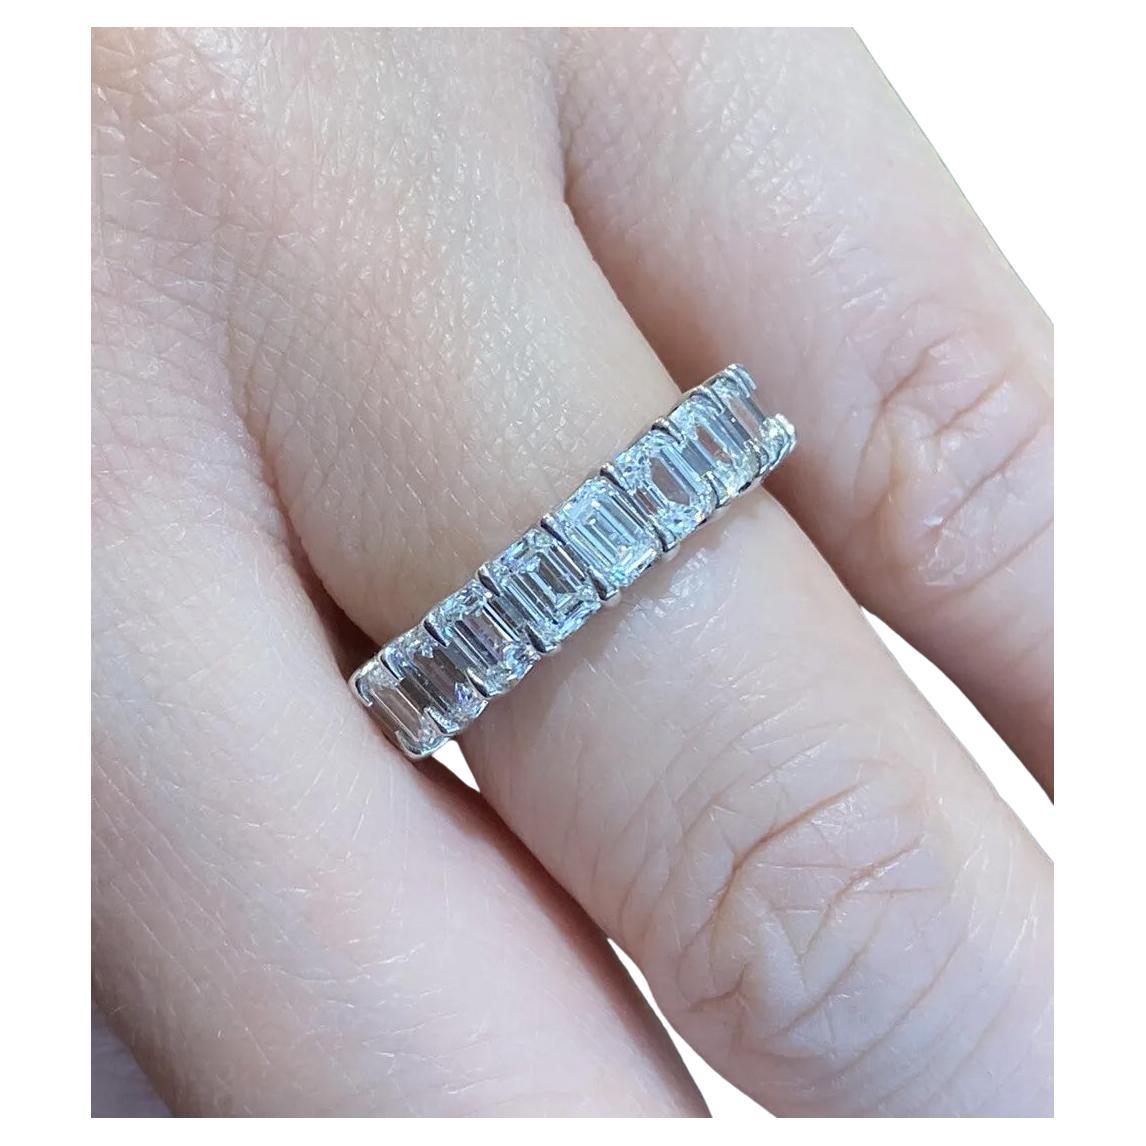 5.12 Carat Total Emerald Cut Diamond Eternity Band Ring in Platinum 5mm 6.25